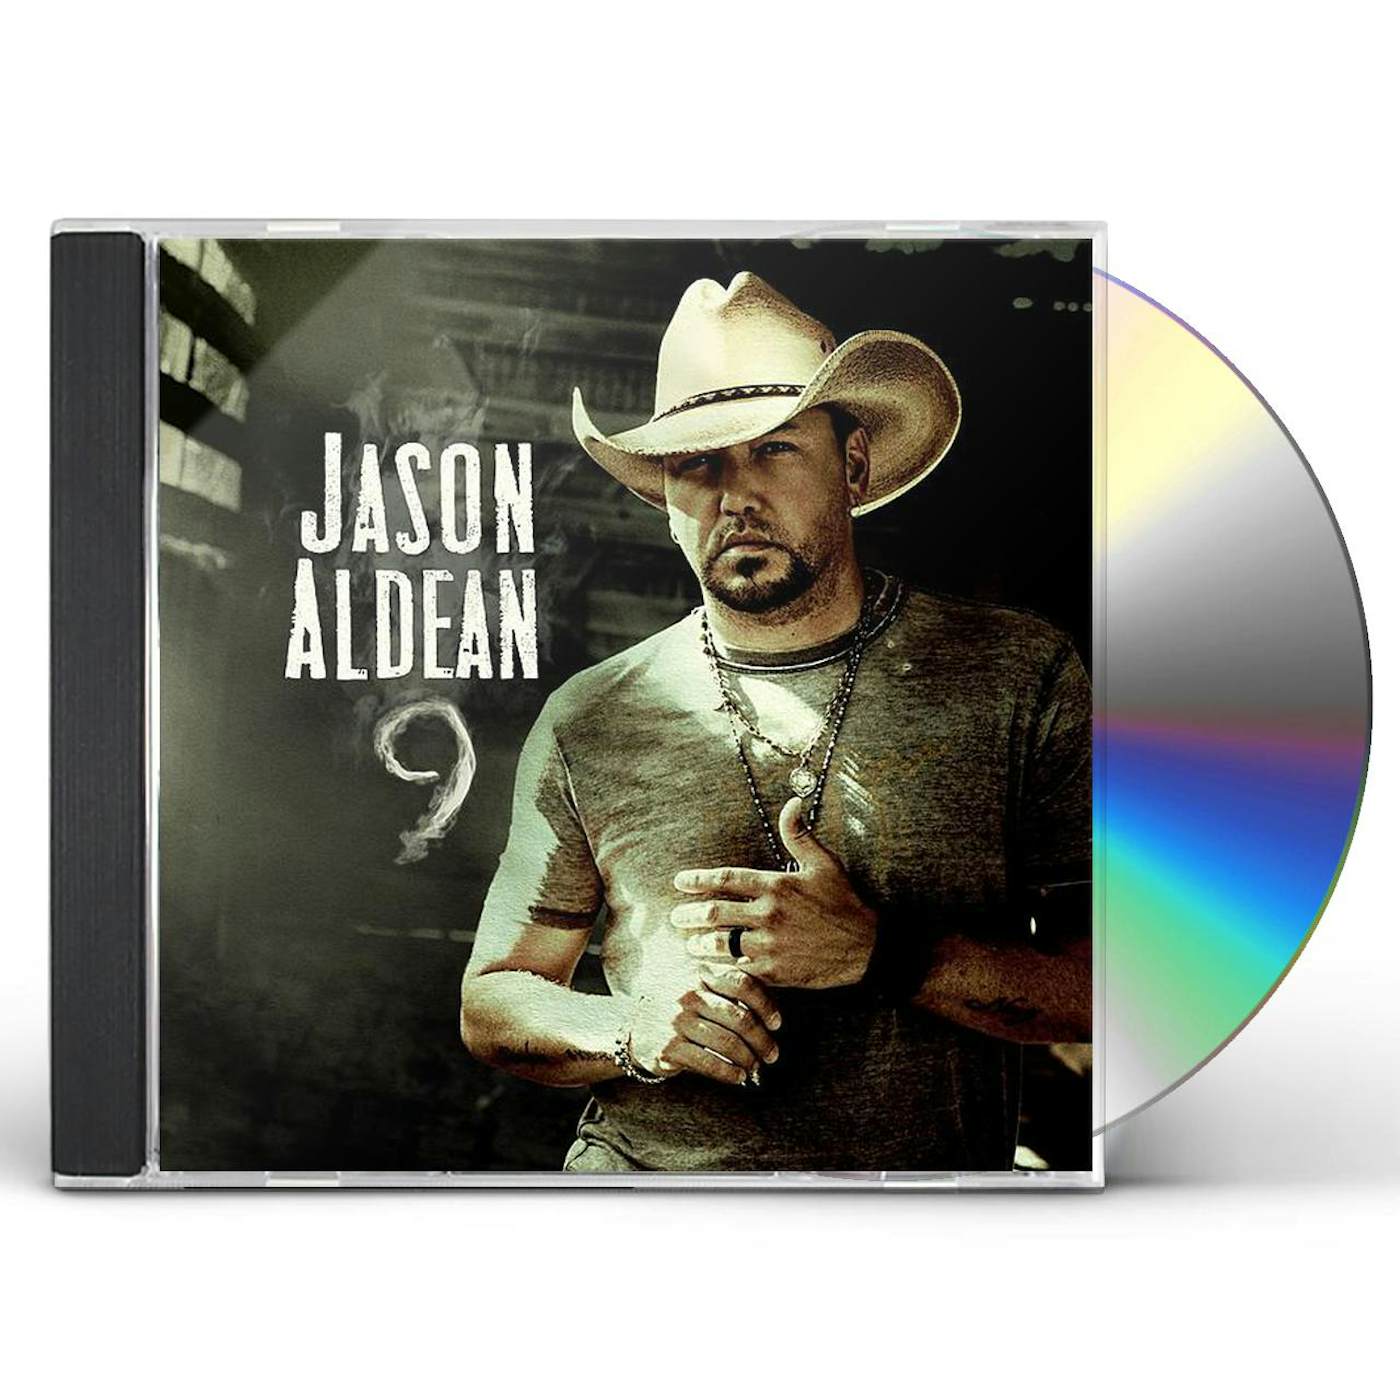 Jason Aldean 9 CD